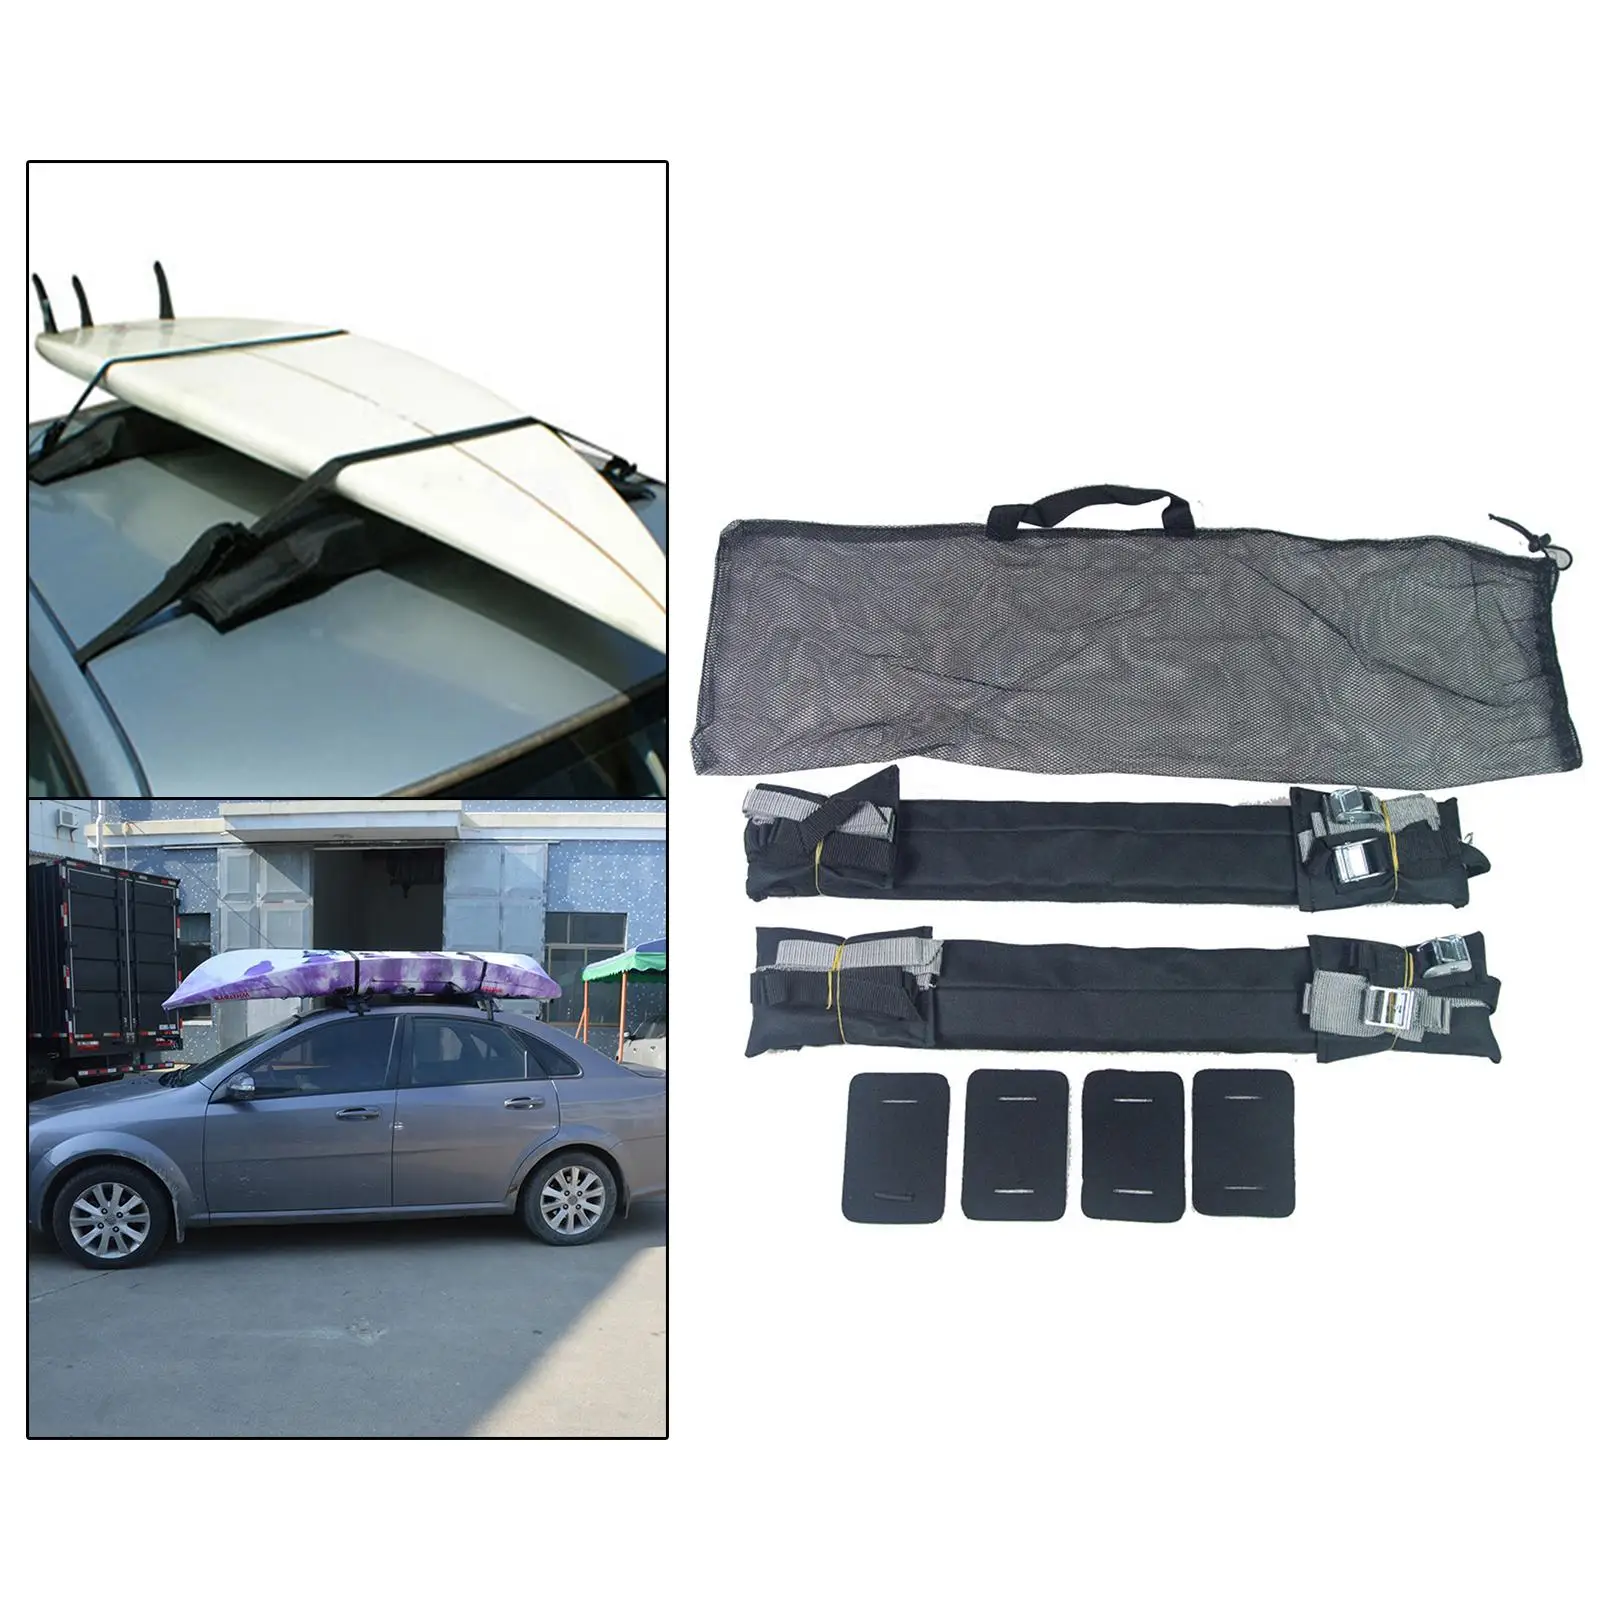 Car Soft Roof Rack Pads Crossbar Oxford EVA Luggage Carrier for Kayak Canoe